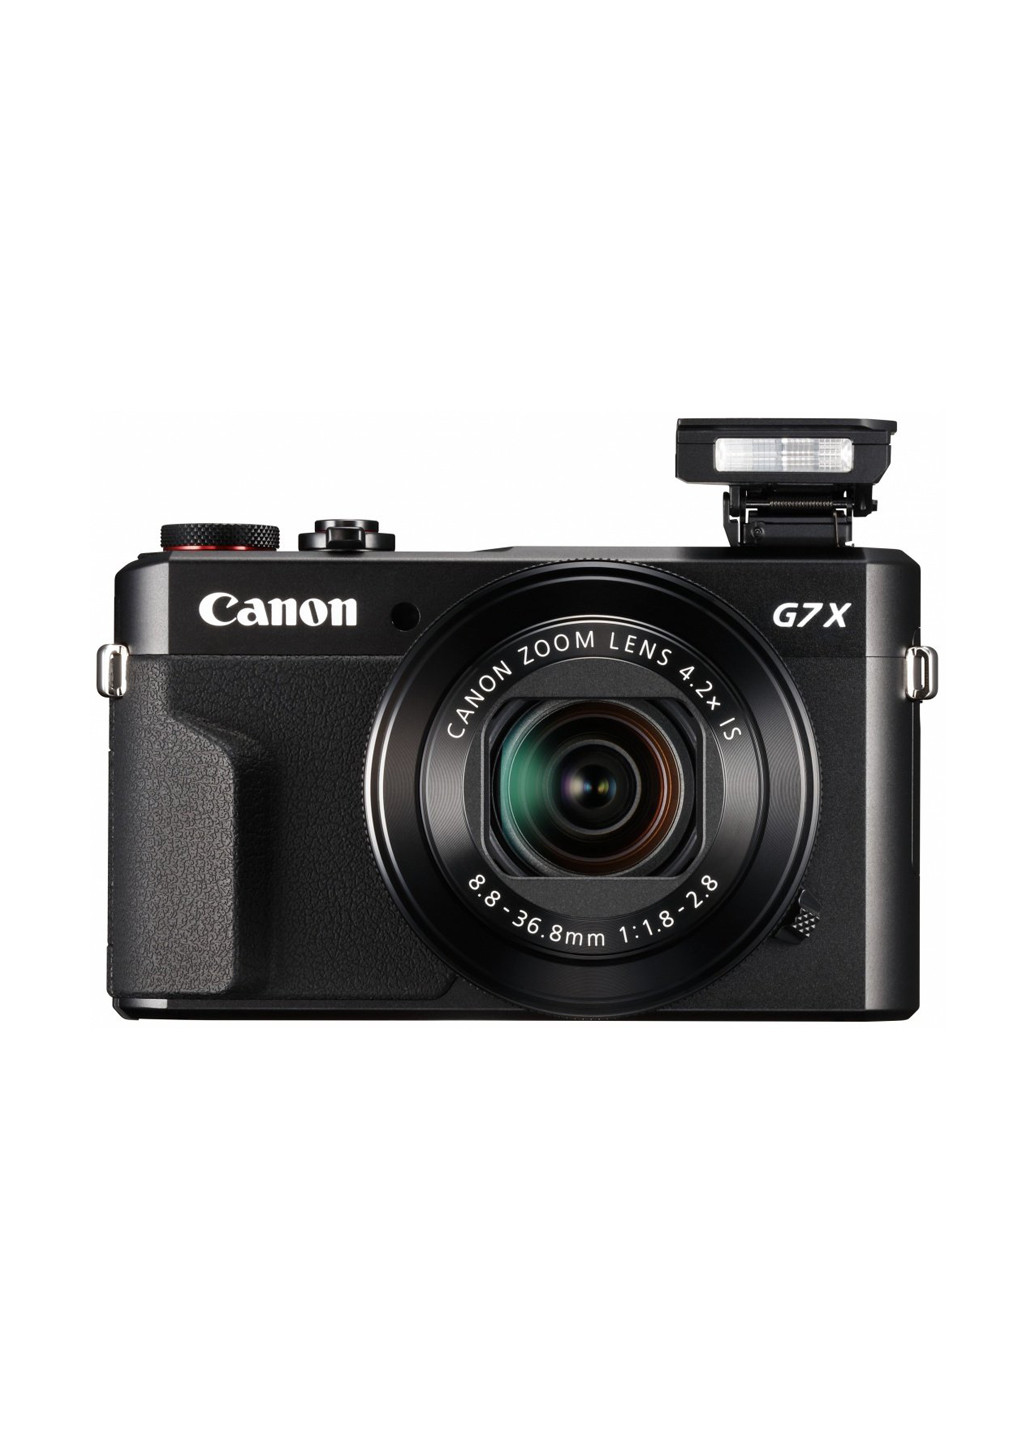 Компактная фотокамера Canon powershot g7 x mark ii c wifi (130567462)